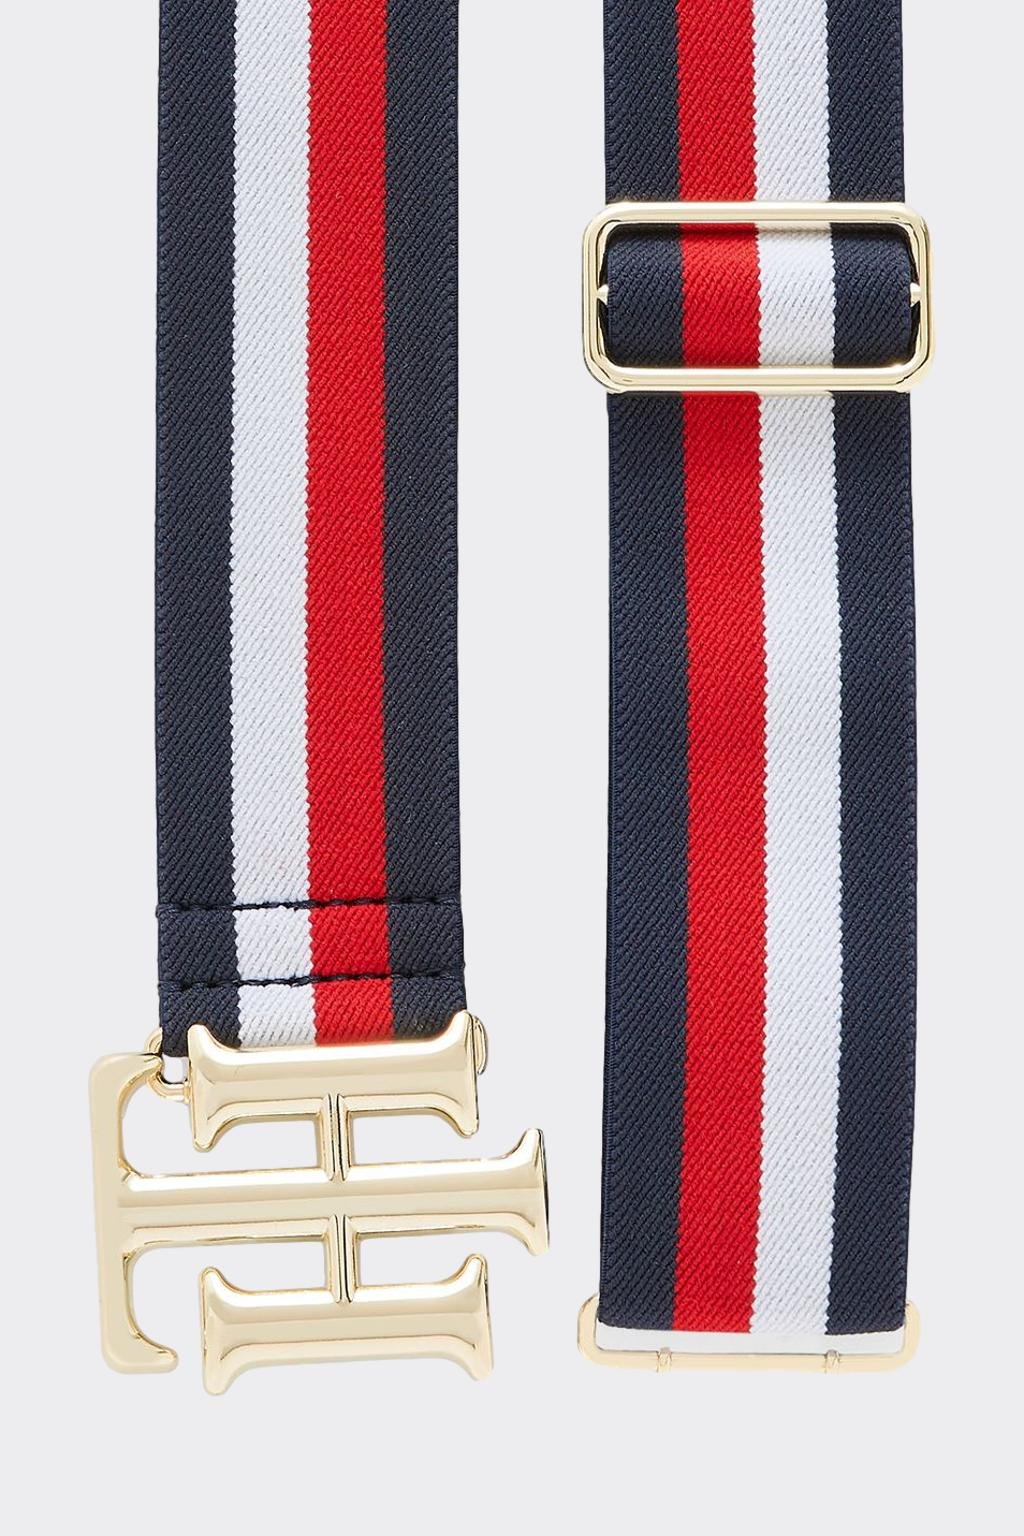 Tommy Hilfiger dámký pásek elastický - červená, bílá, modrá